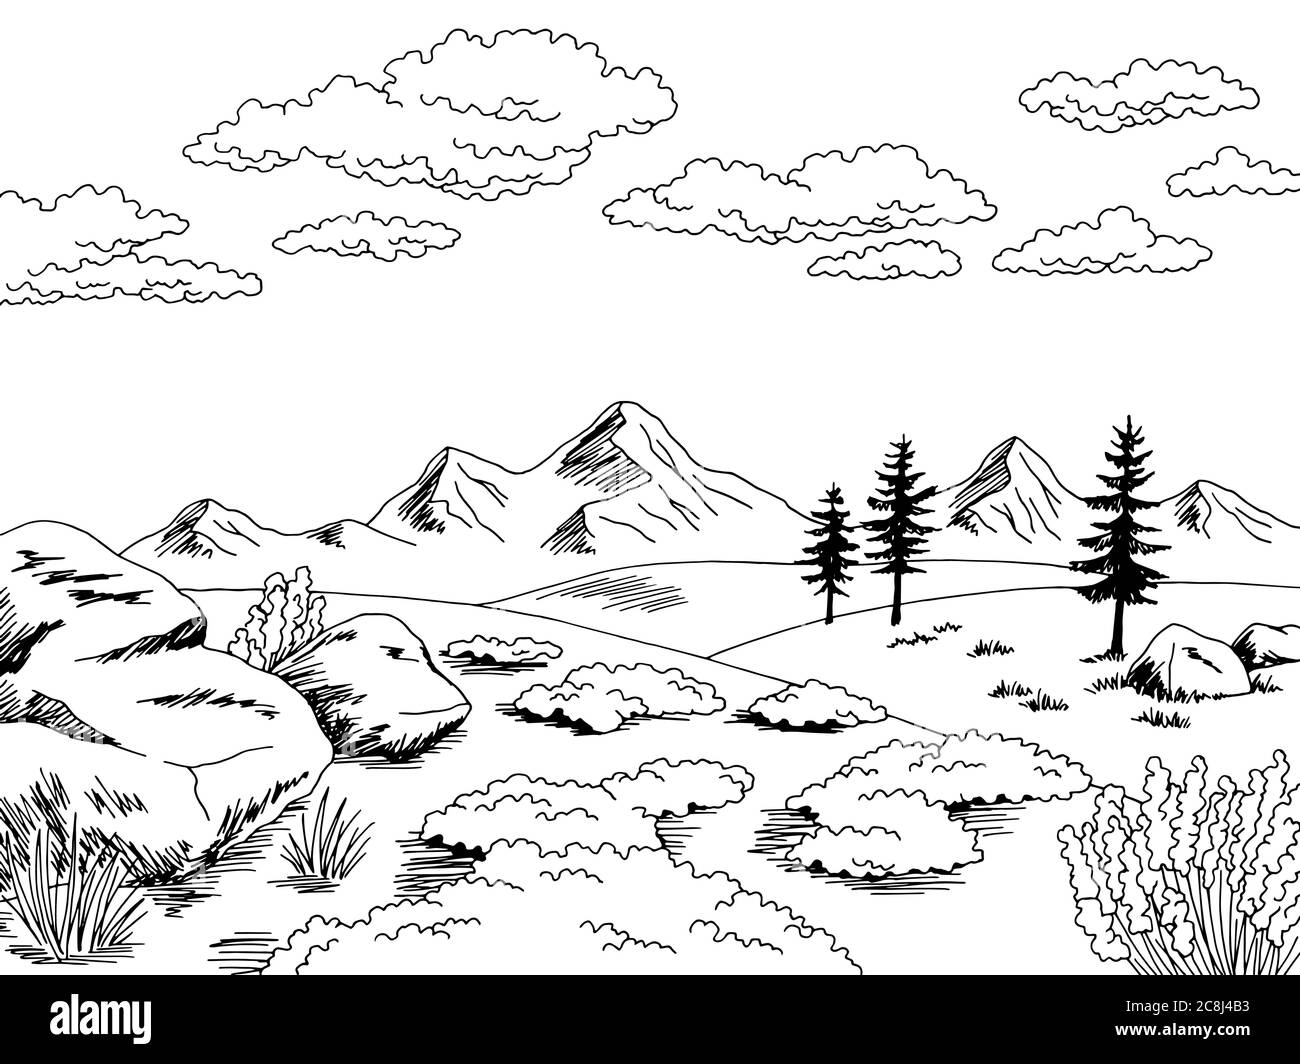 Tundra Grafik schwarz weiß Landschaft Skizze Illustration Vektor Stock Vektor